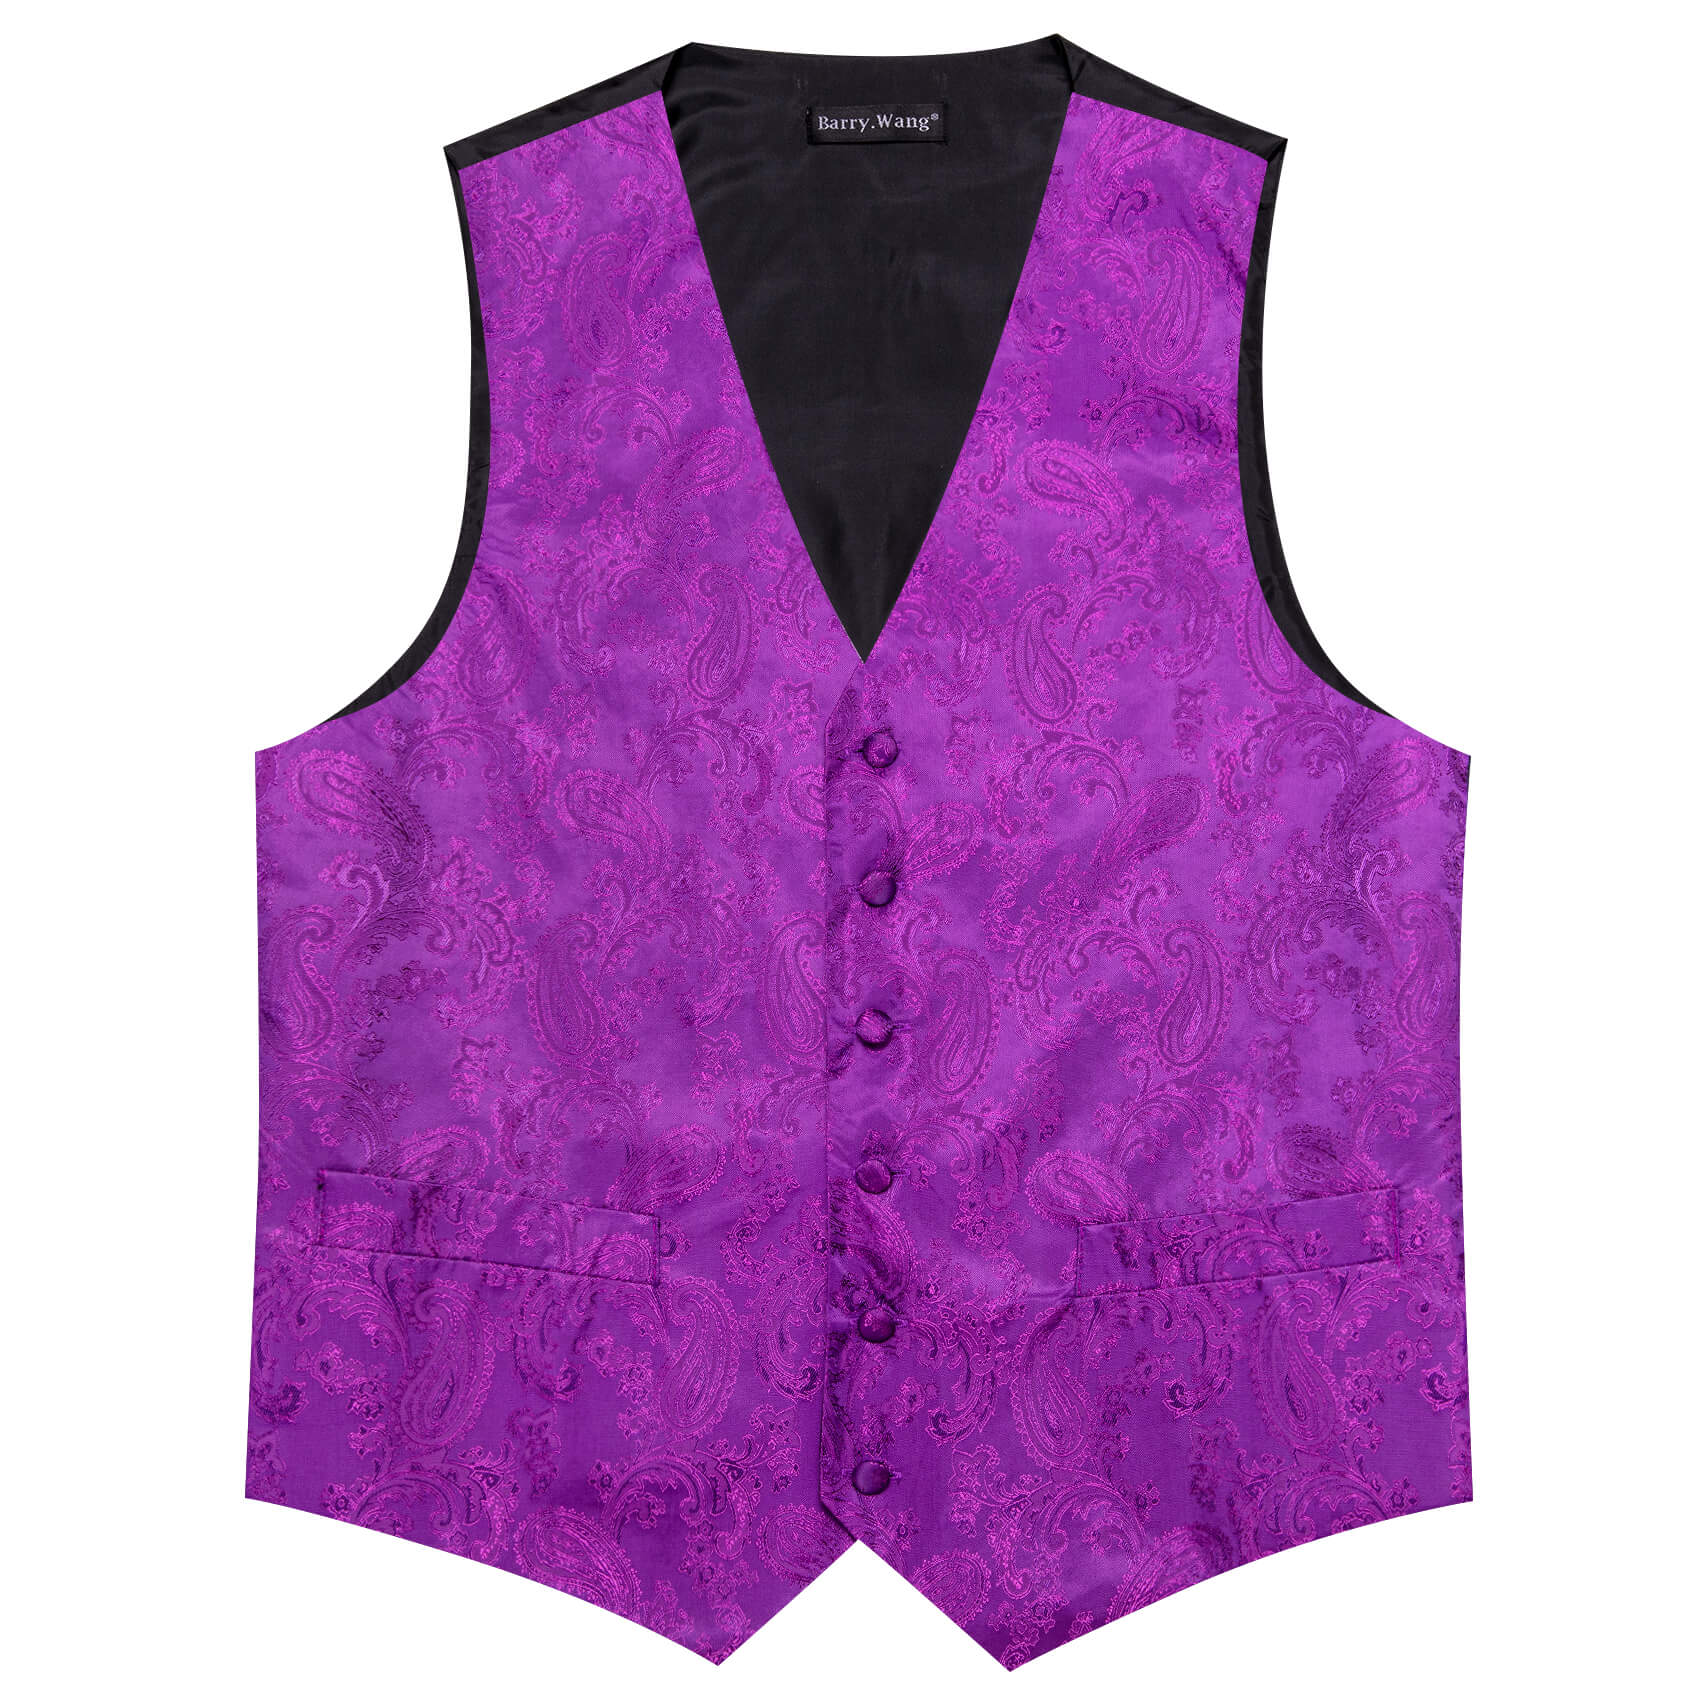 Barry Wang 5pcs Mens Waistcoat Set Purple Paisley Vest